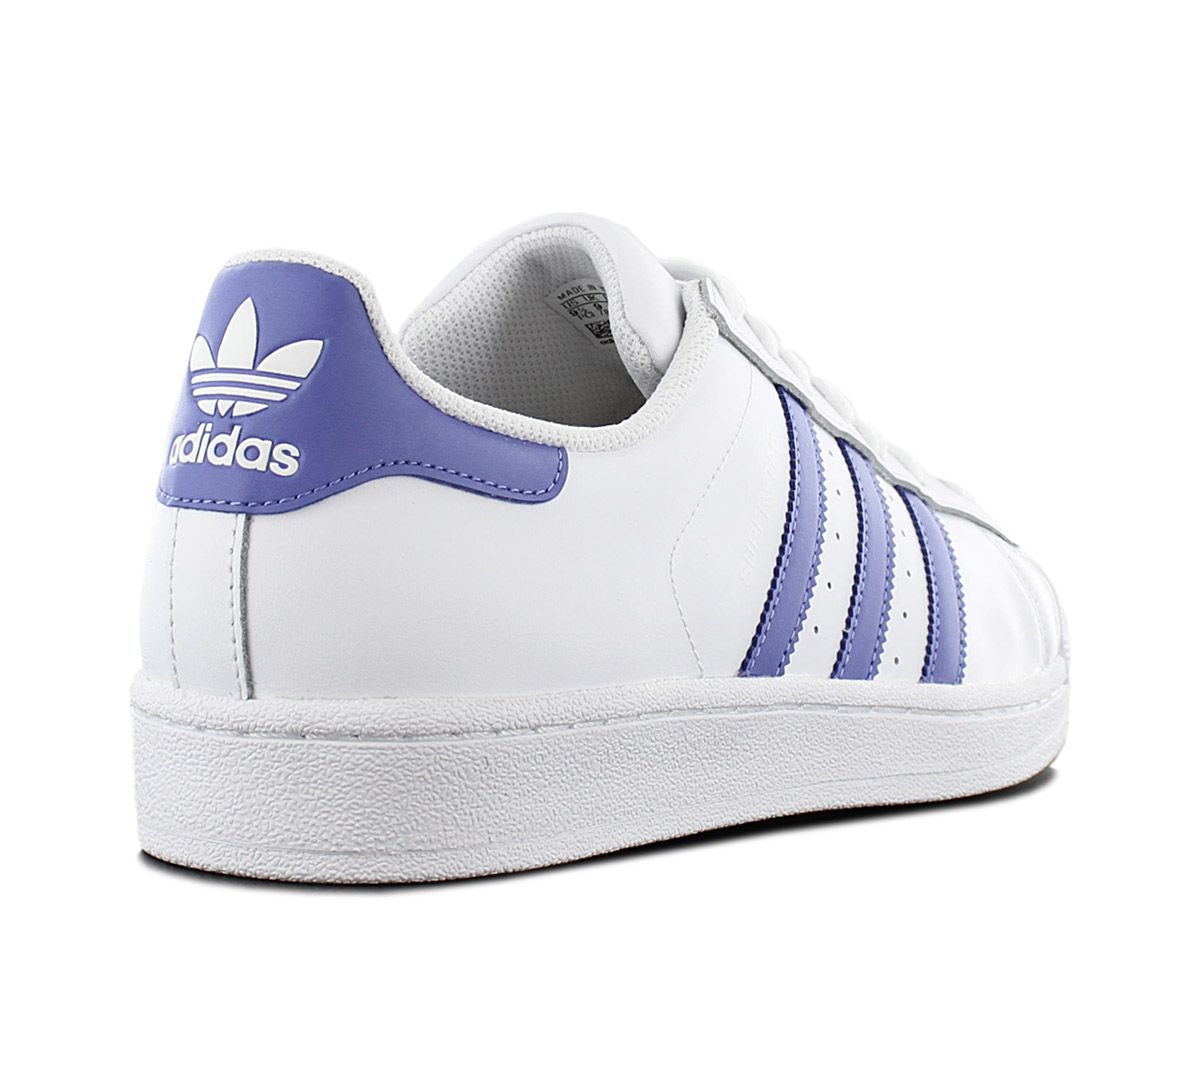 Adidas Originals Superstar Men's Sneaker G27810 White Shoes Casual 